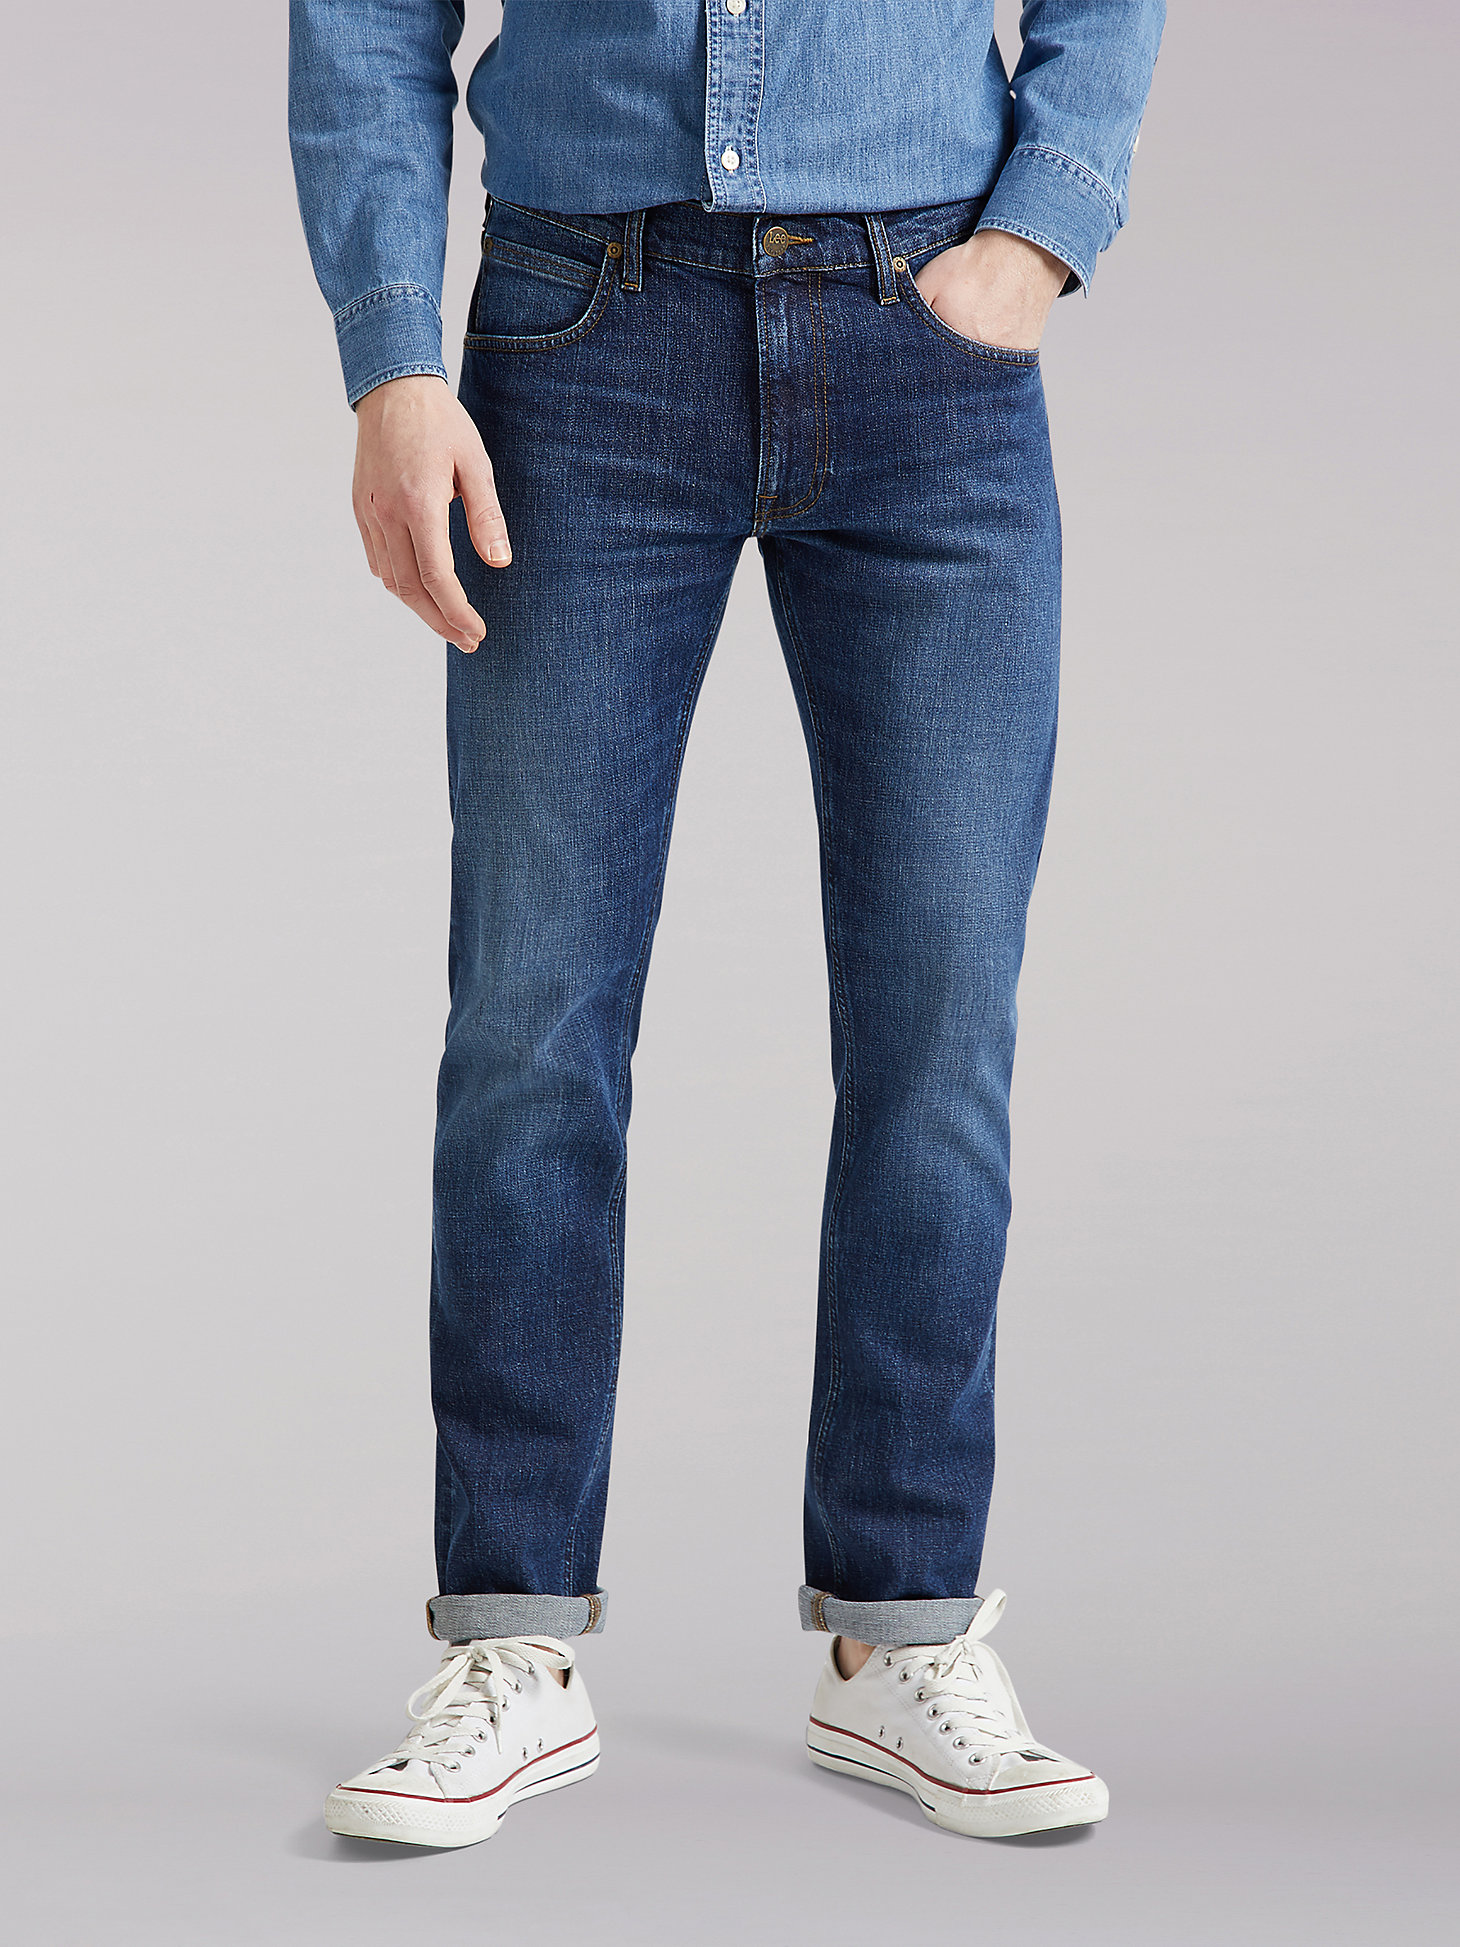 Mens Lee Daren X-Long 36 Inch leg Regular Slim Fit Jeans AA36 Indigo Blue 